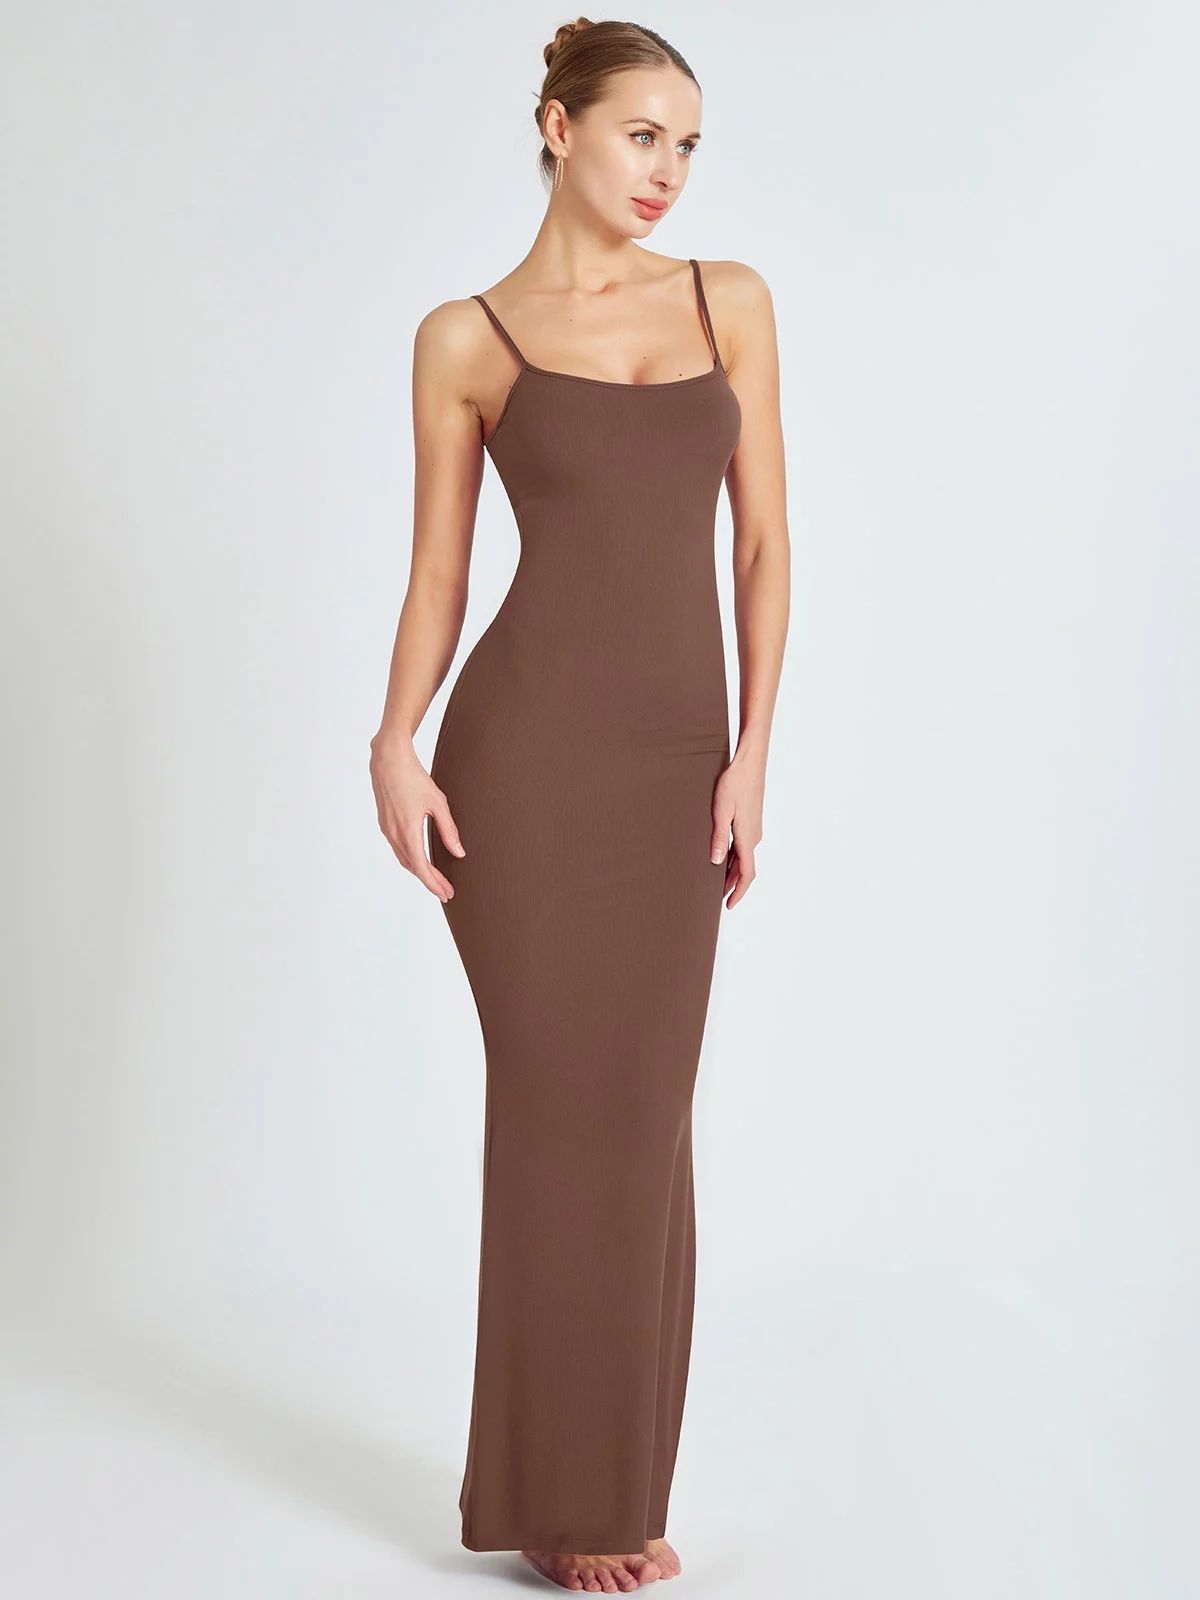 REORIA Women's Slip Dress Ribbed Solid Maxi Wrap Dresses | Walmart (US)